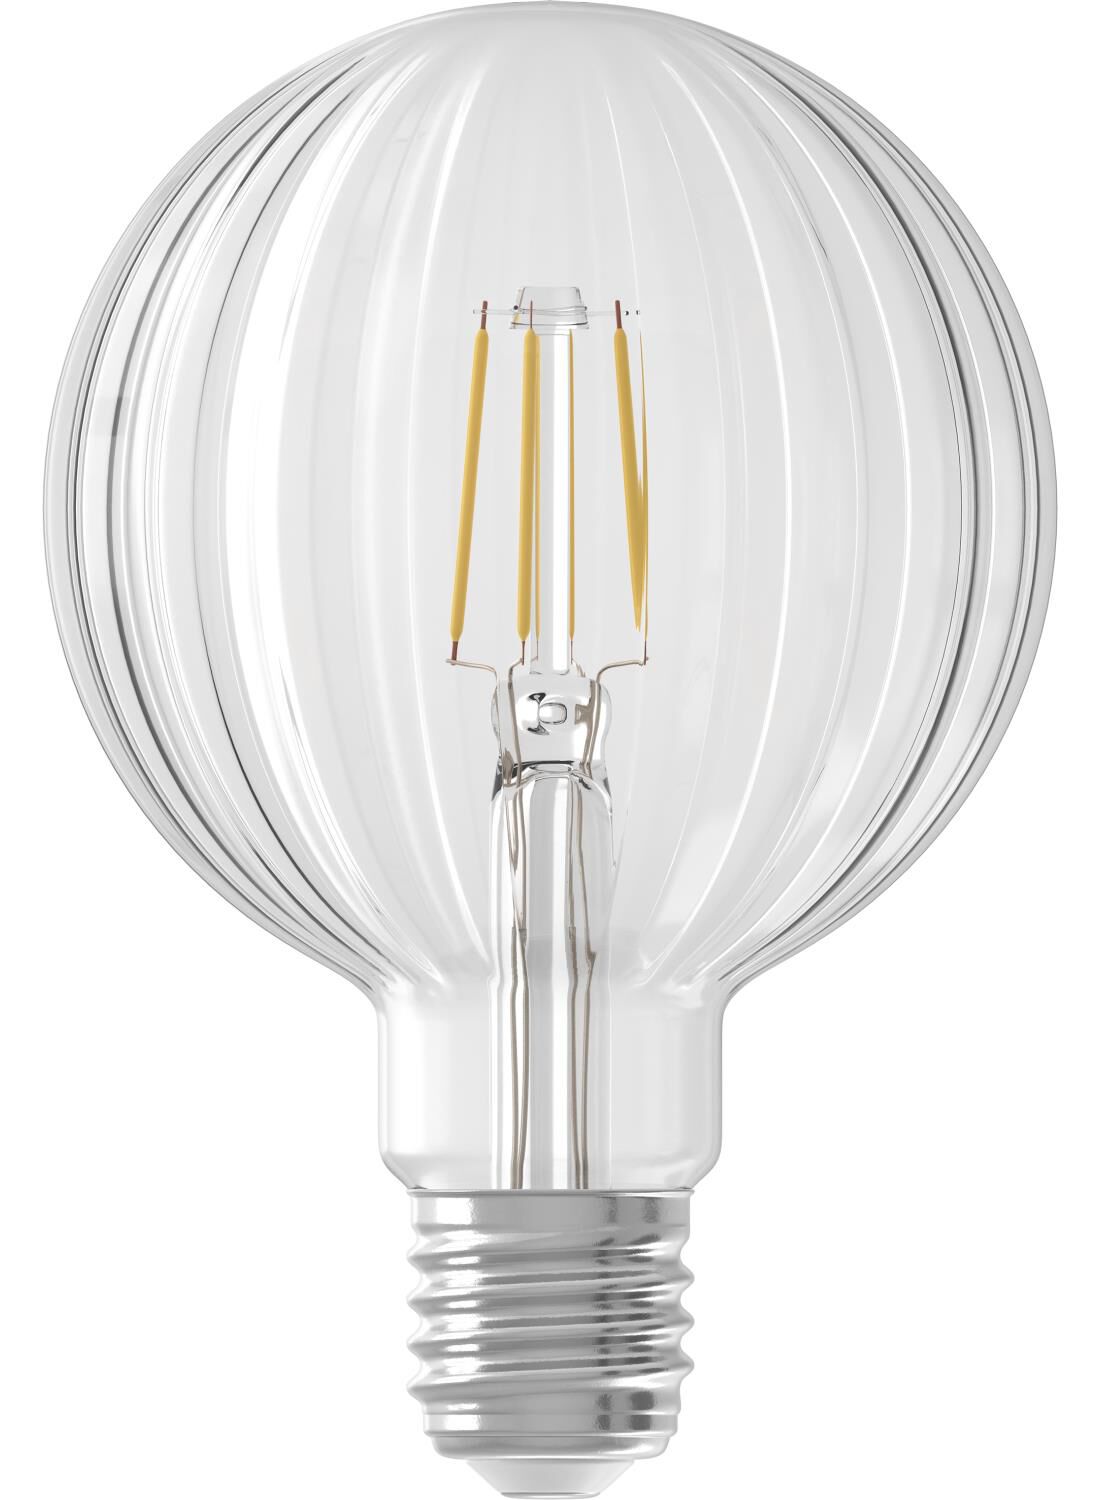 HEMA LED Lamp 4W - 300 Lm - Pompoen - Helder (transparant)